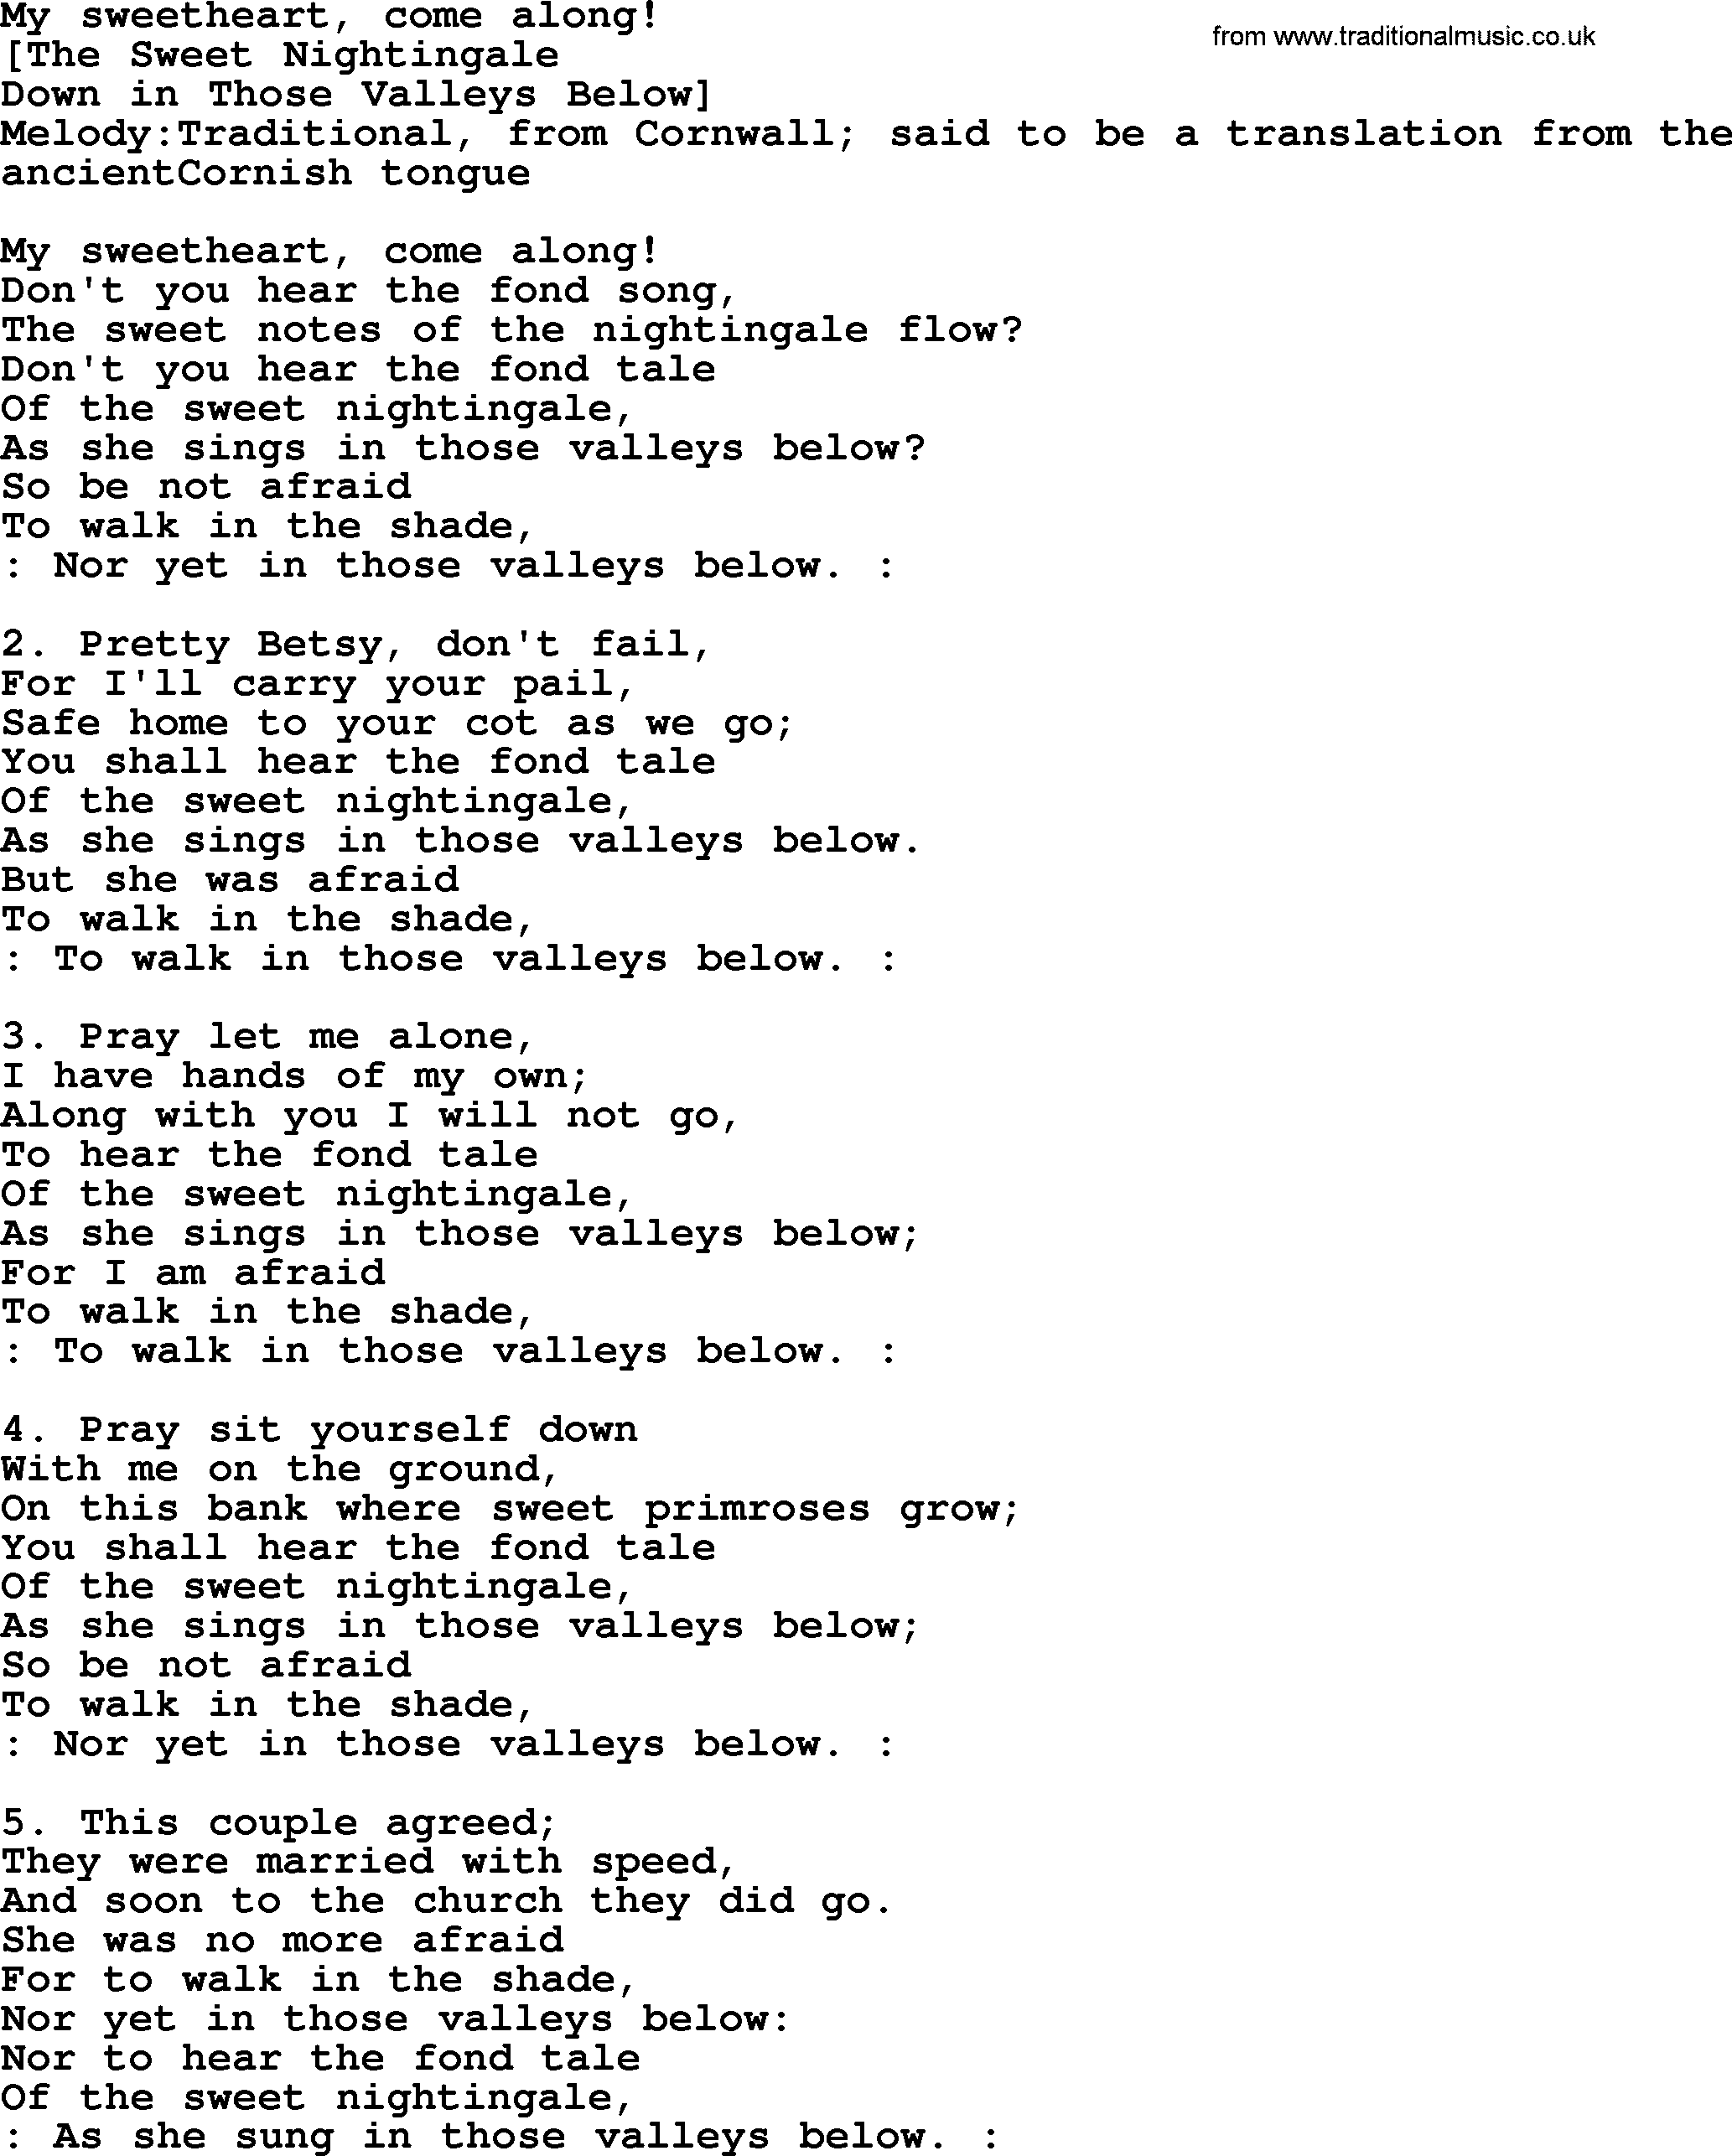 Old English Song: My Sweetheart, Come Along! lyrics